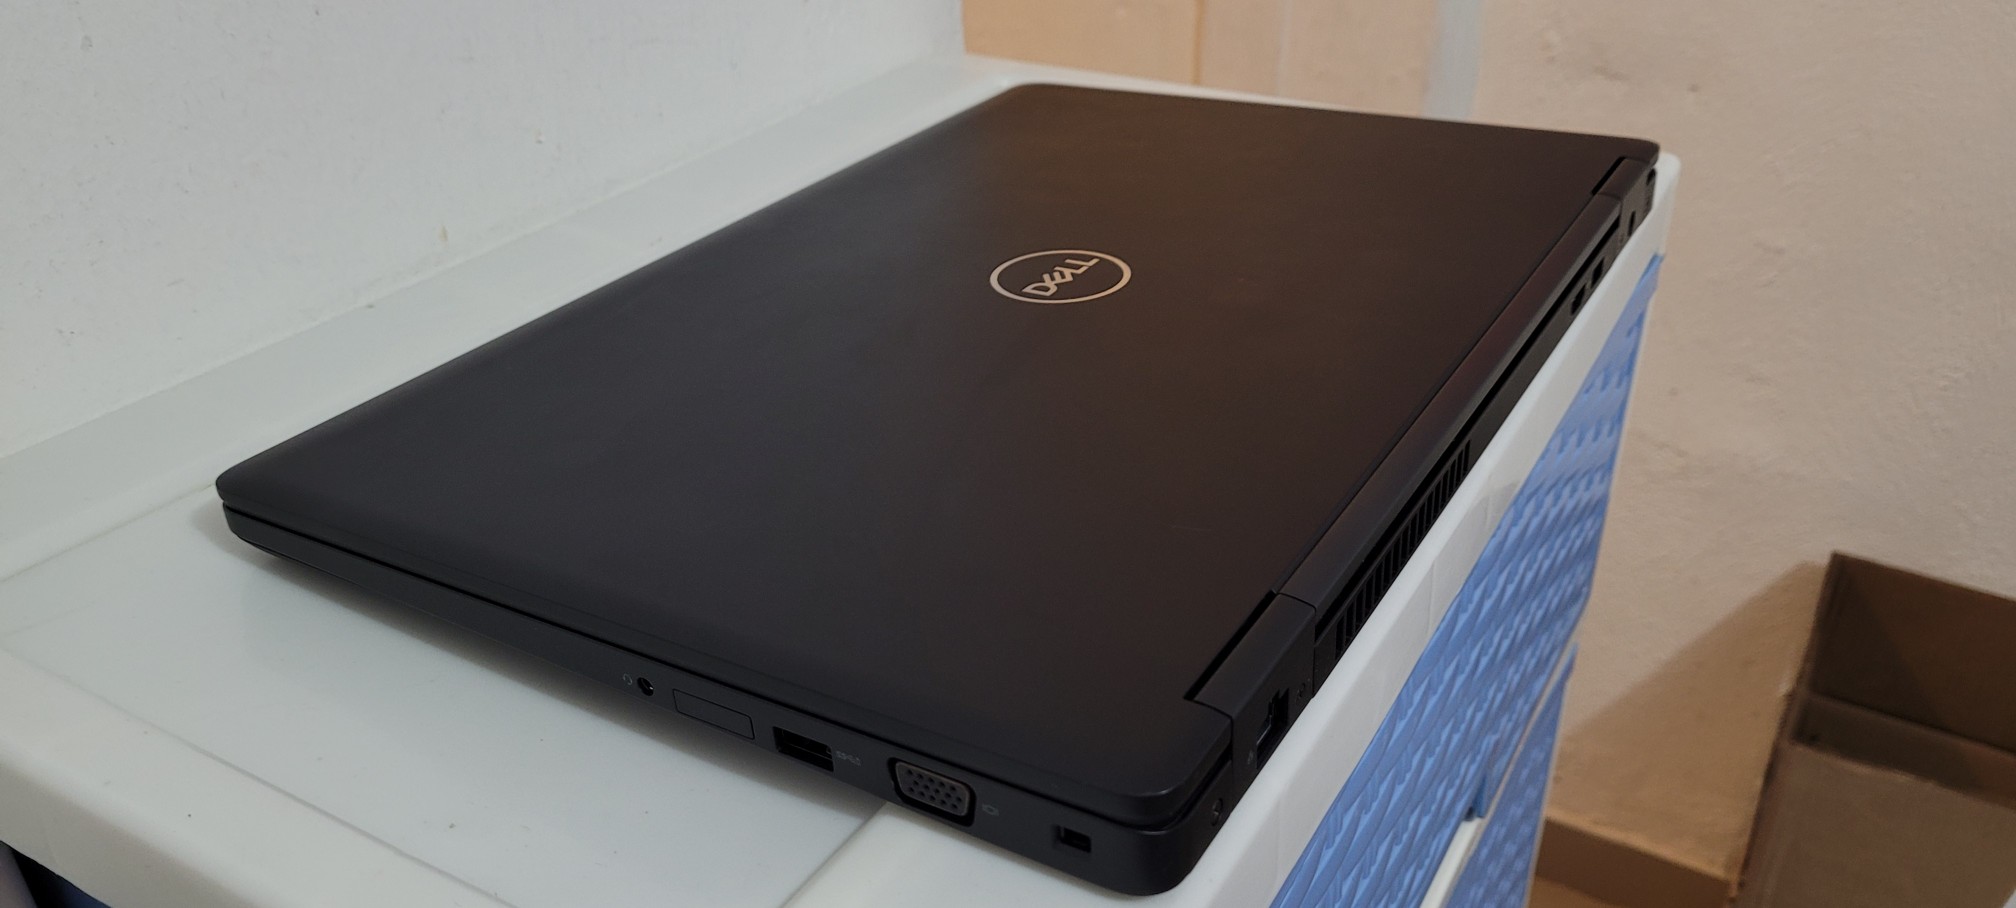 computadoras y laptops - Laptop Dell 14 Pulg Core i7 6ta Gen Ram 16gb Disco 256gb SSD Video 8gb 2